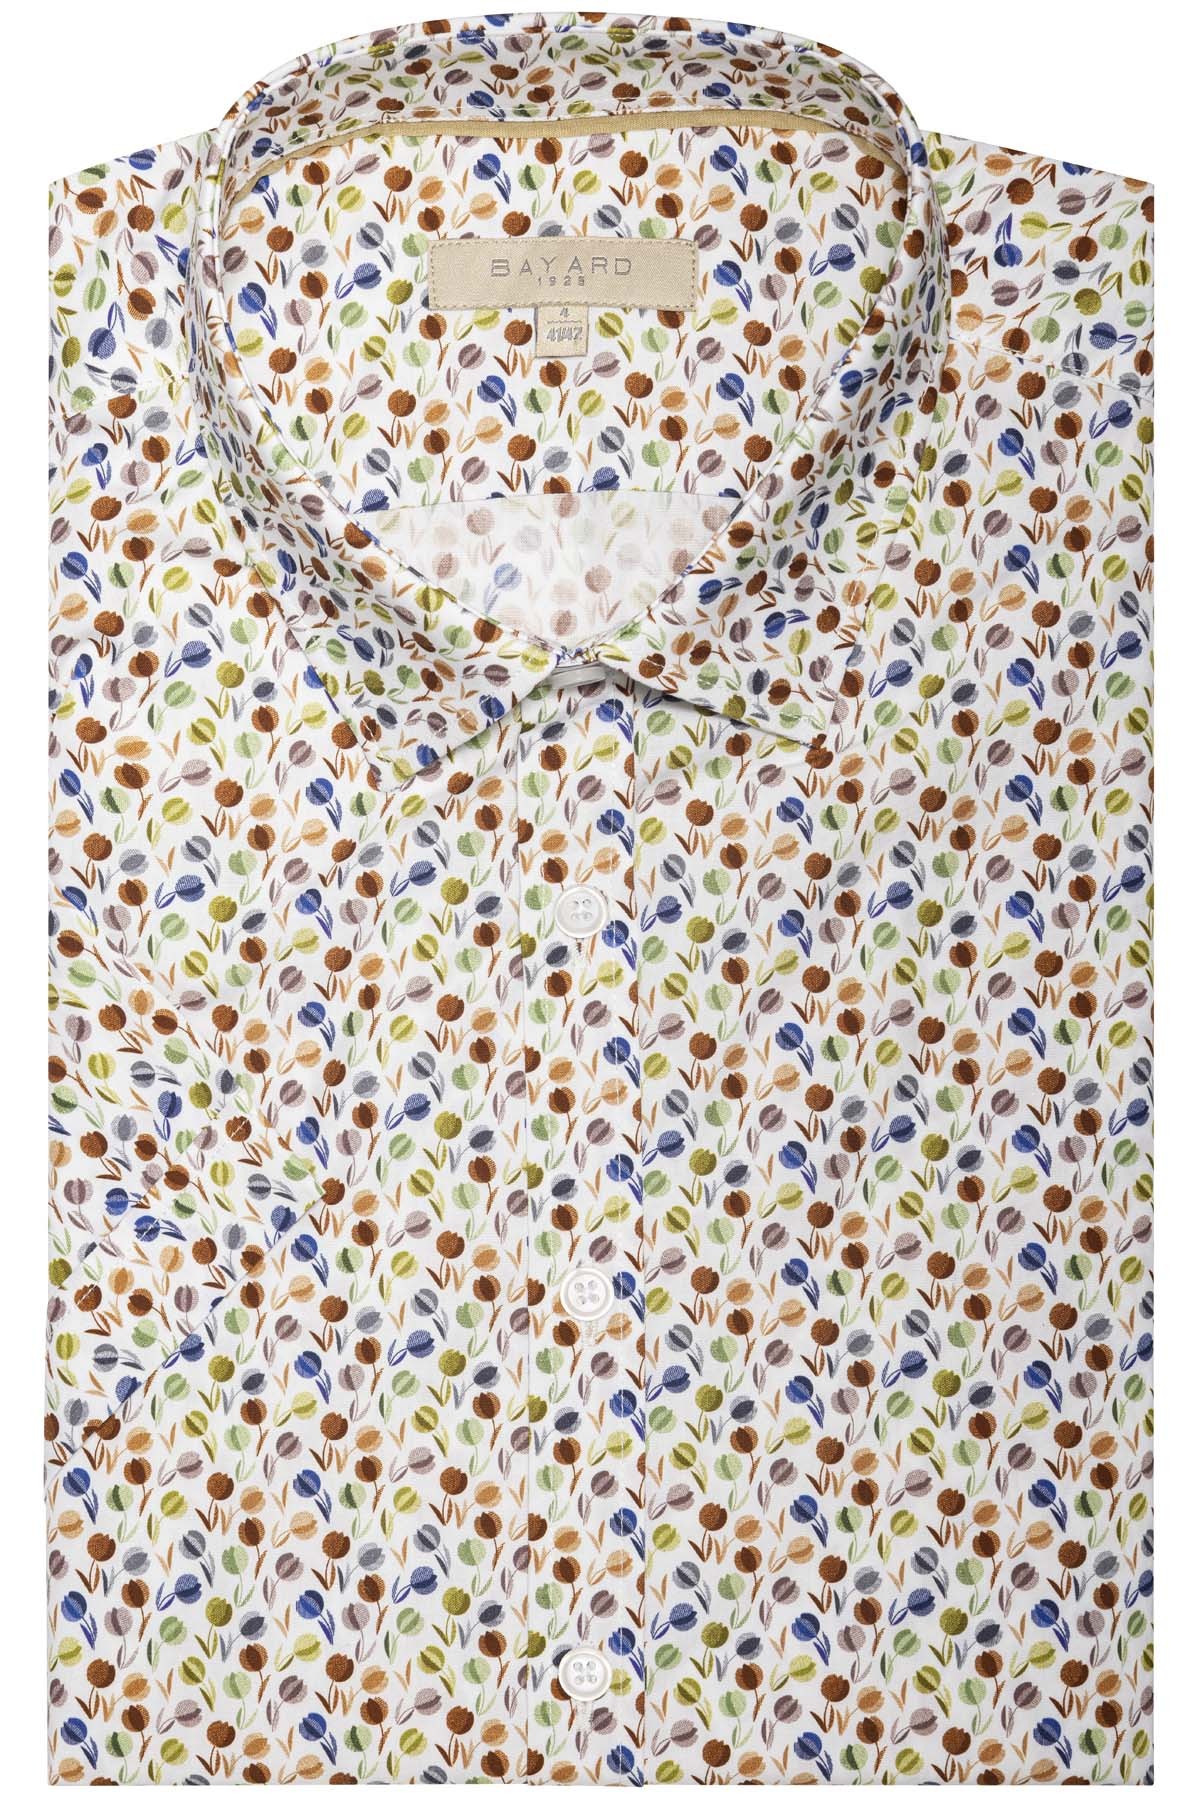 chemisette imprimée fleurs bleu marron et vert bayard